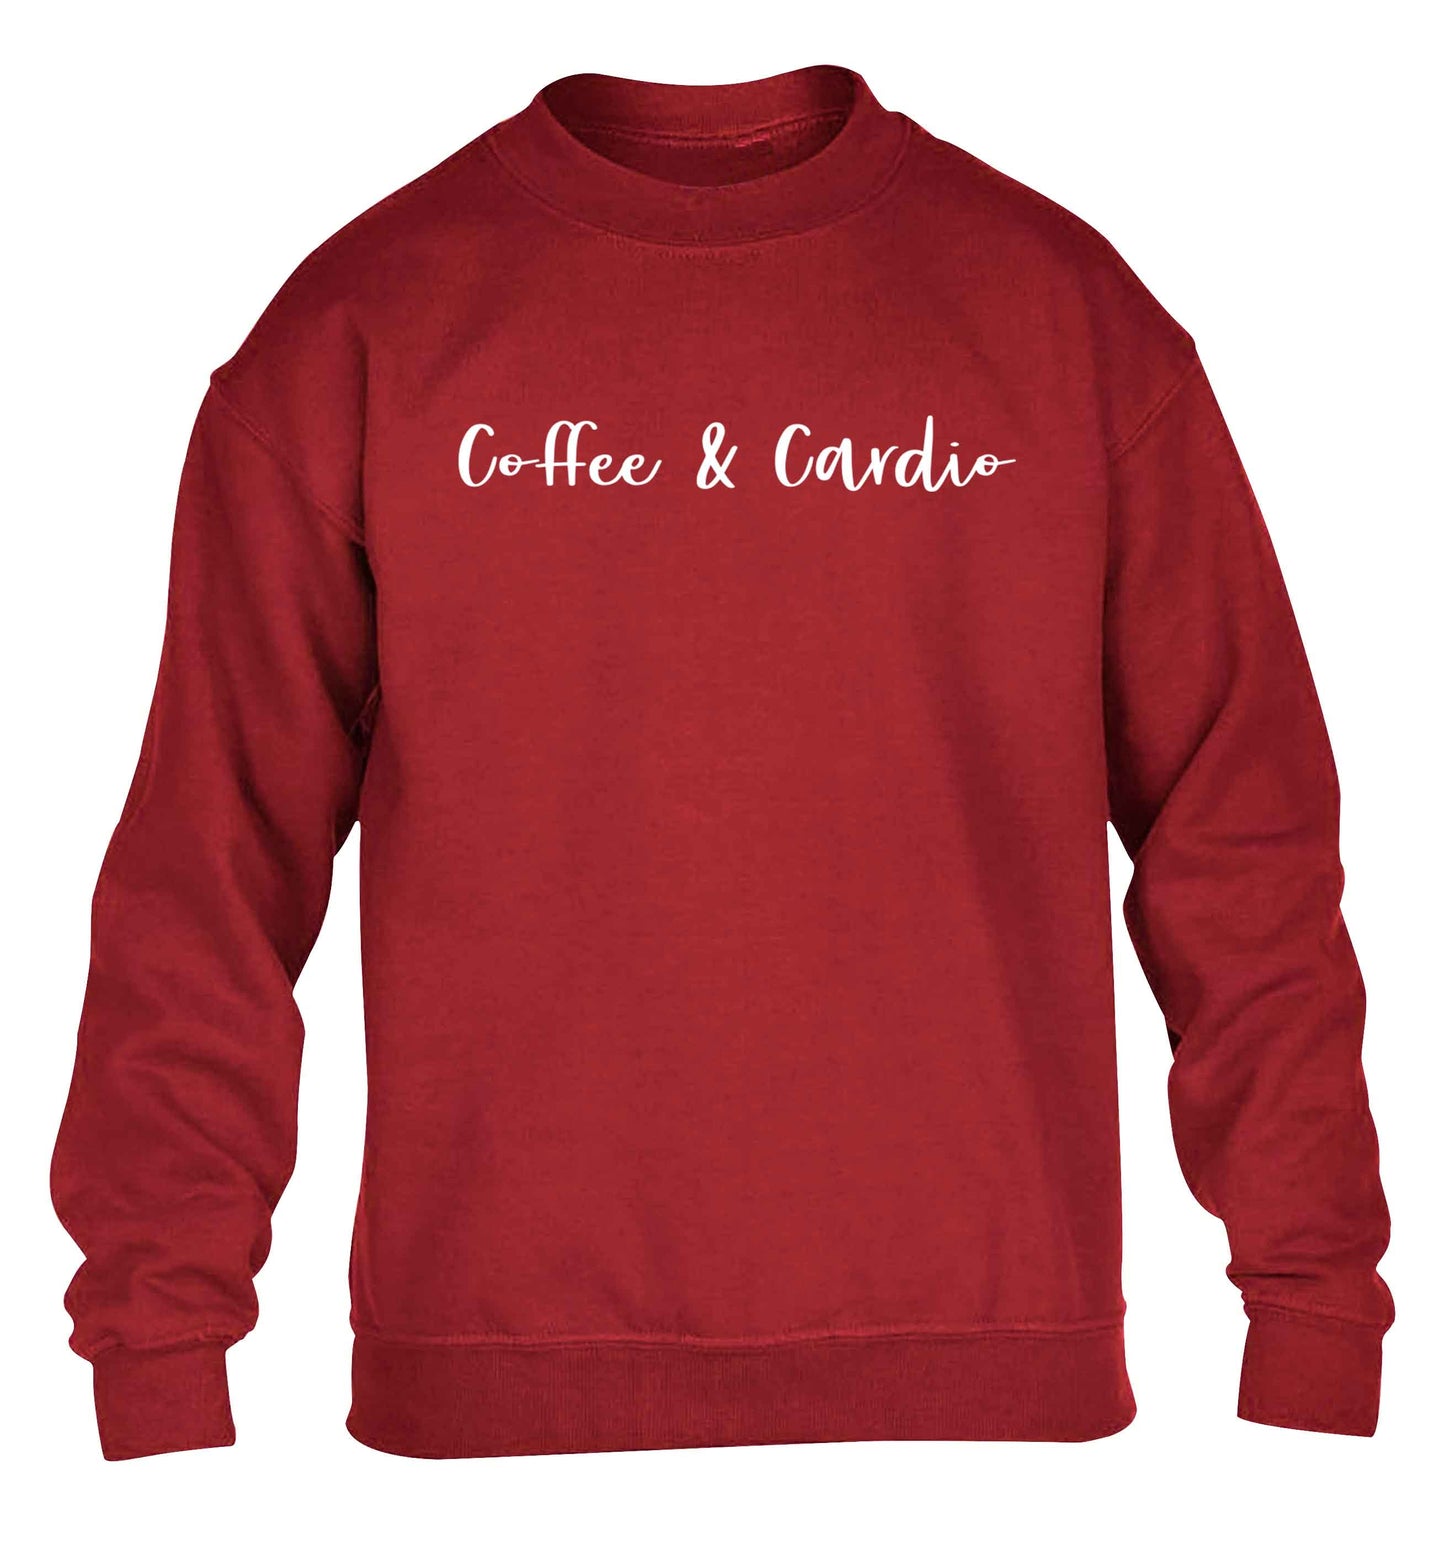 Coffee and cardio children's grey sweater 12-13 Years